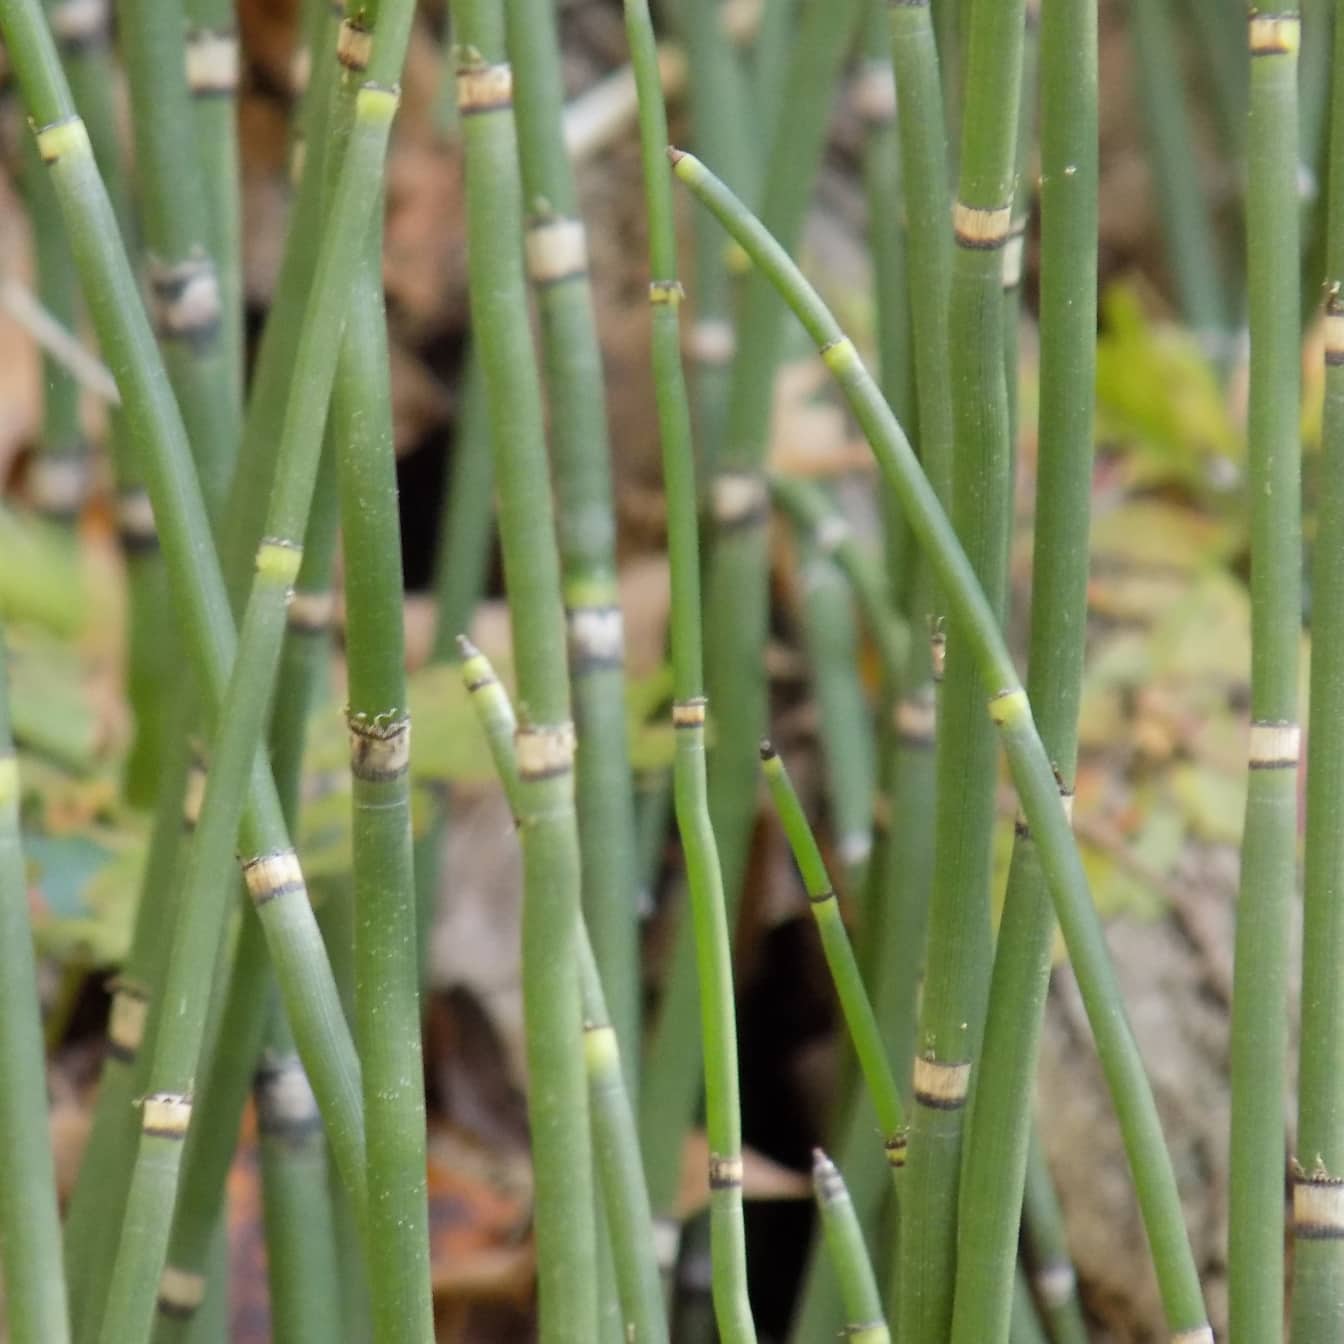 Horsetail reed plante (Equisetum hyemale – camtschatcense)